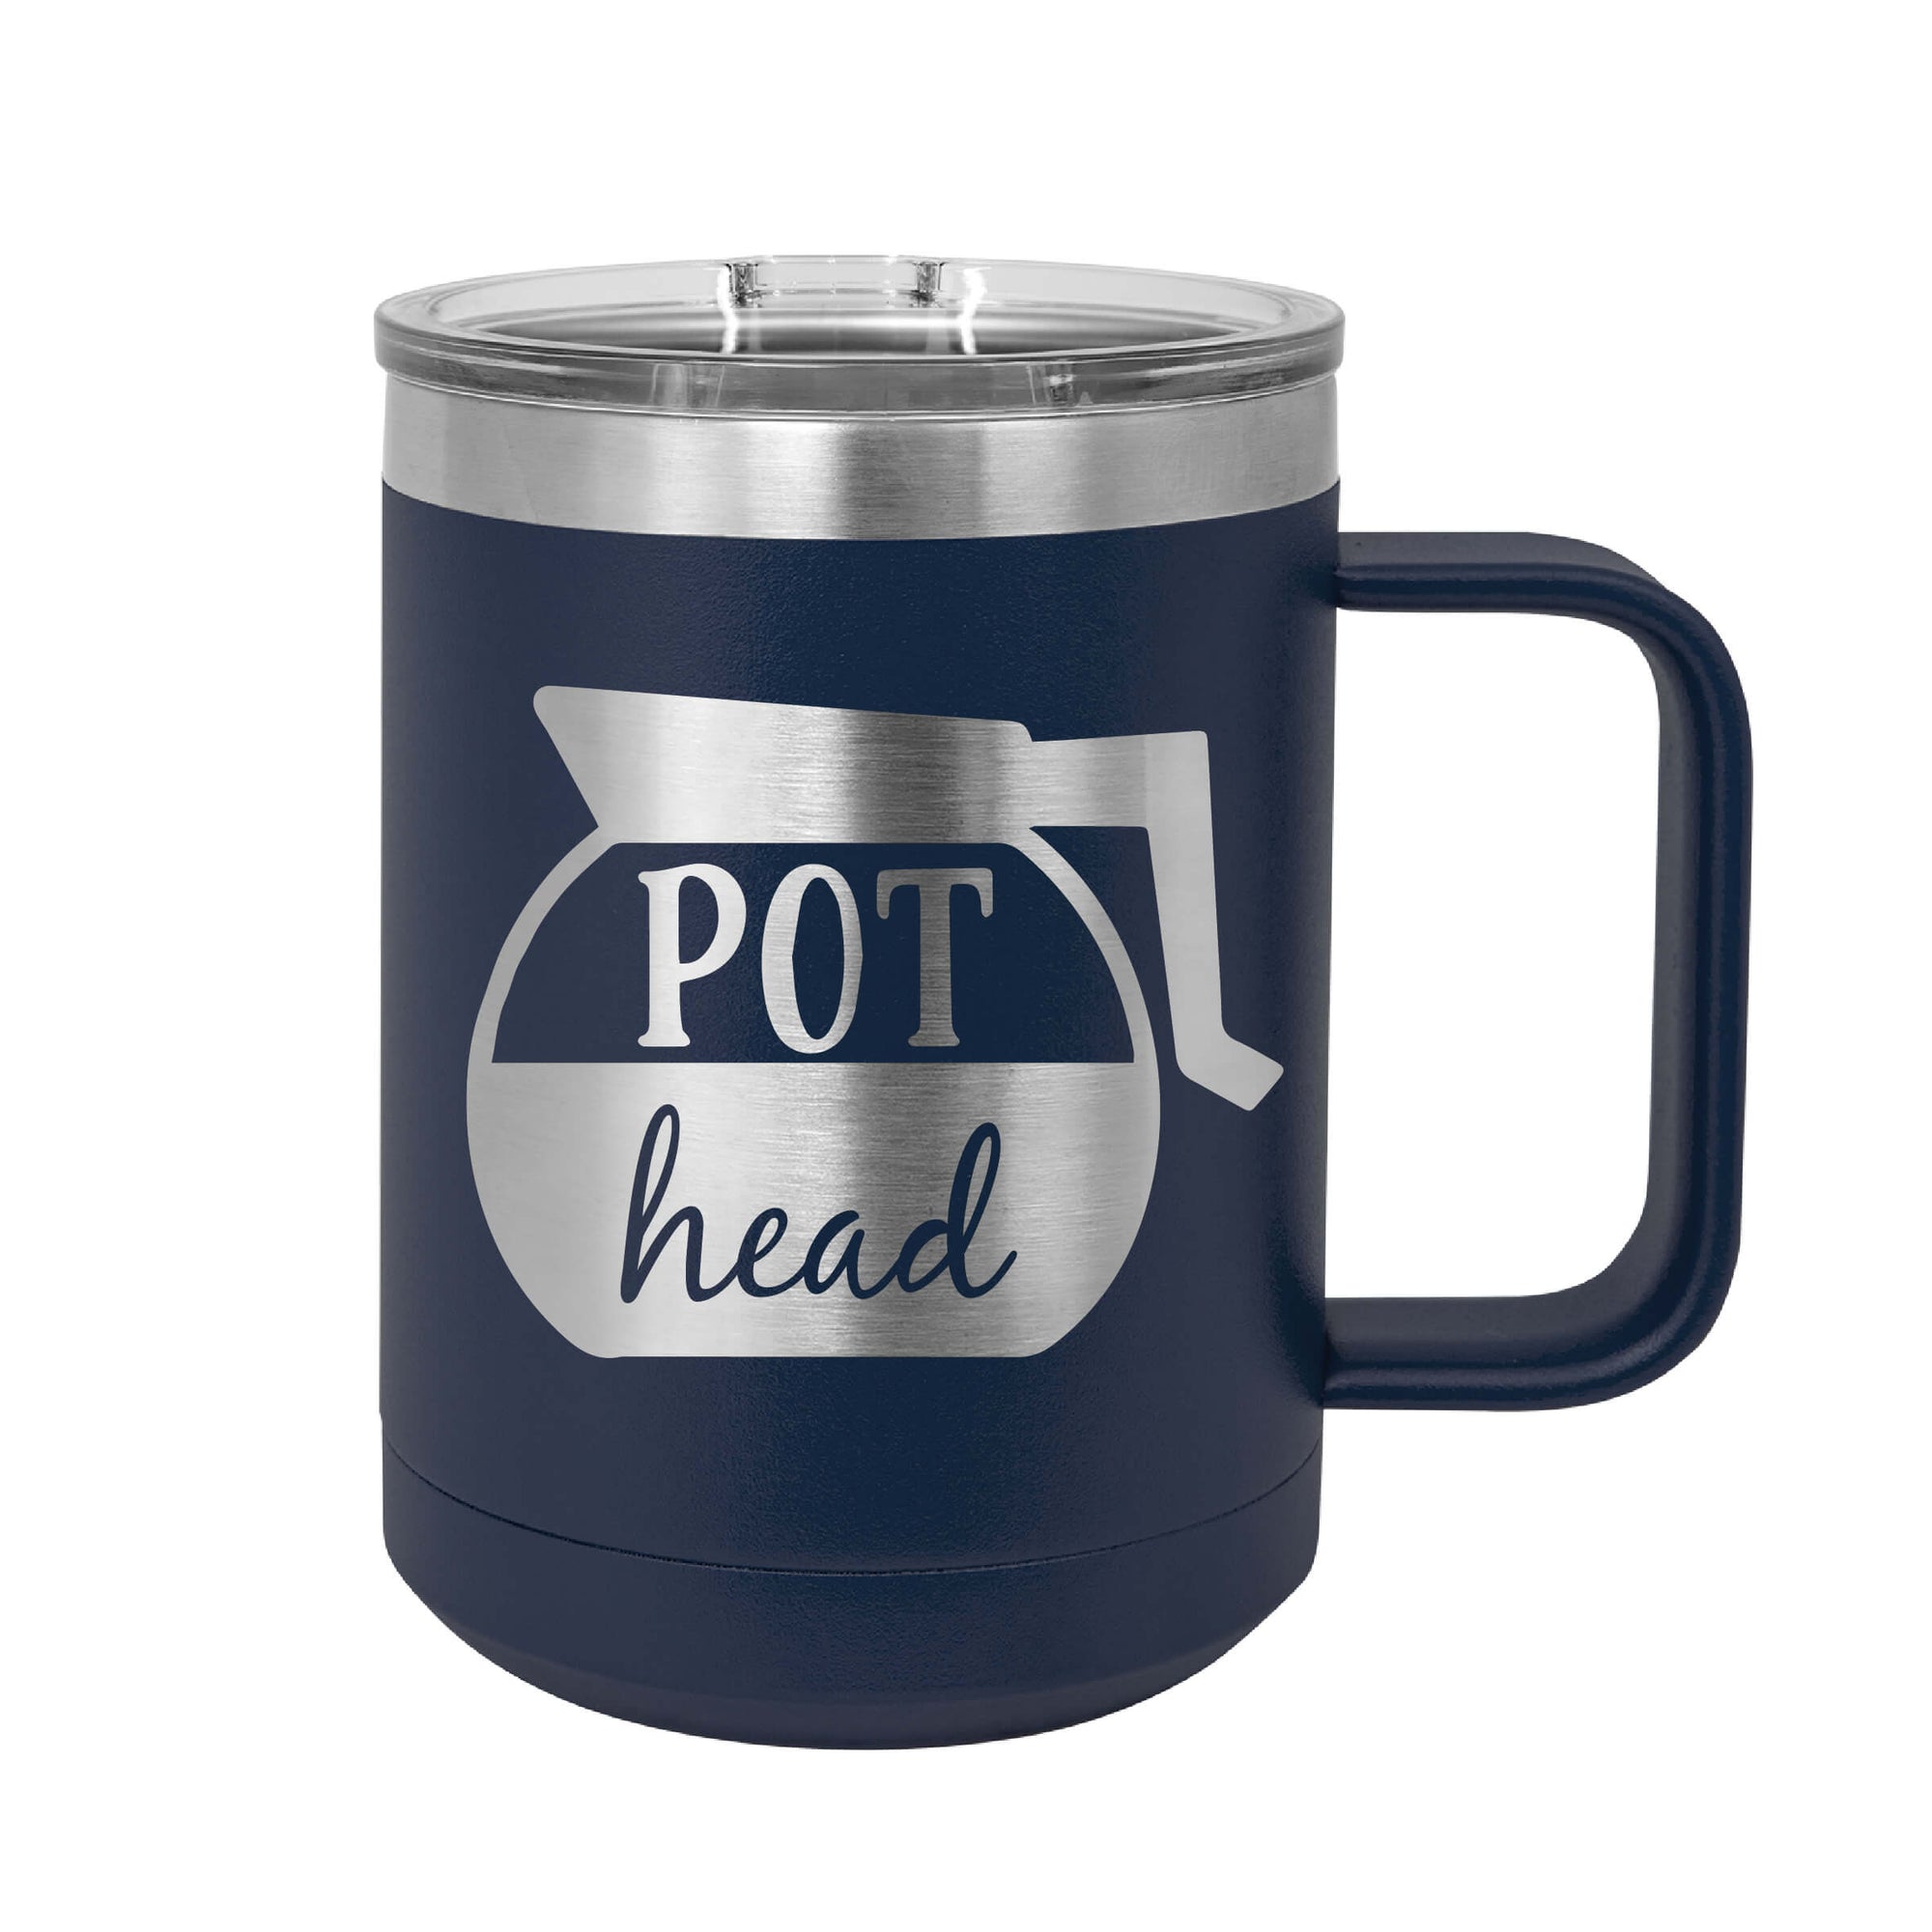 Pot Head Insulated Mug Tumbler